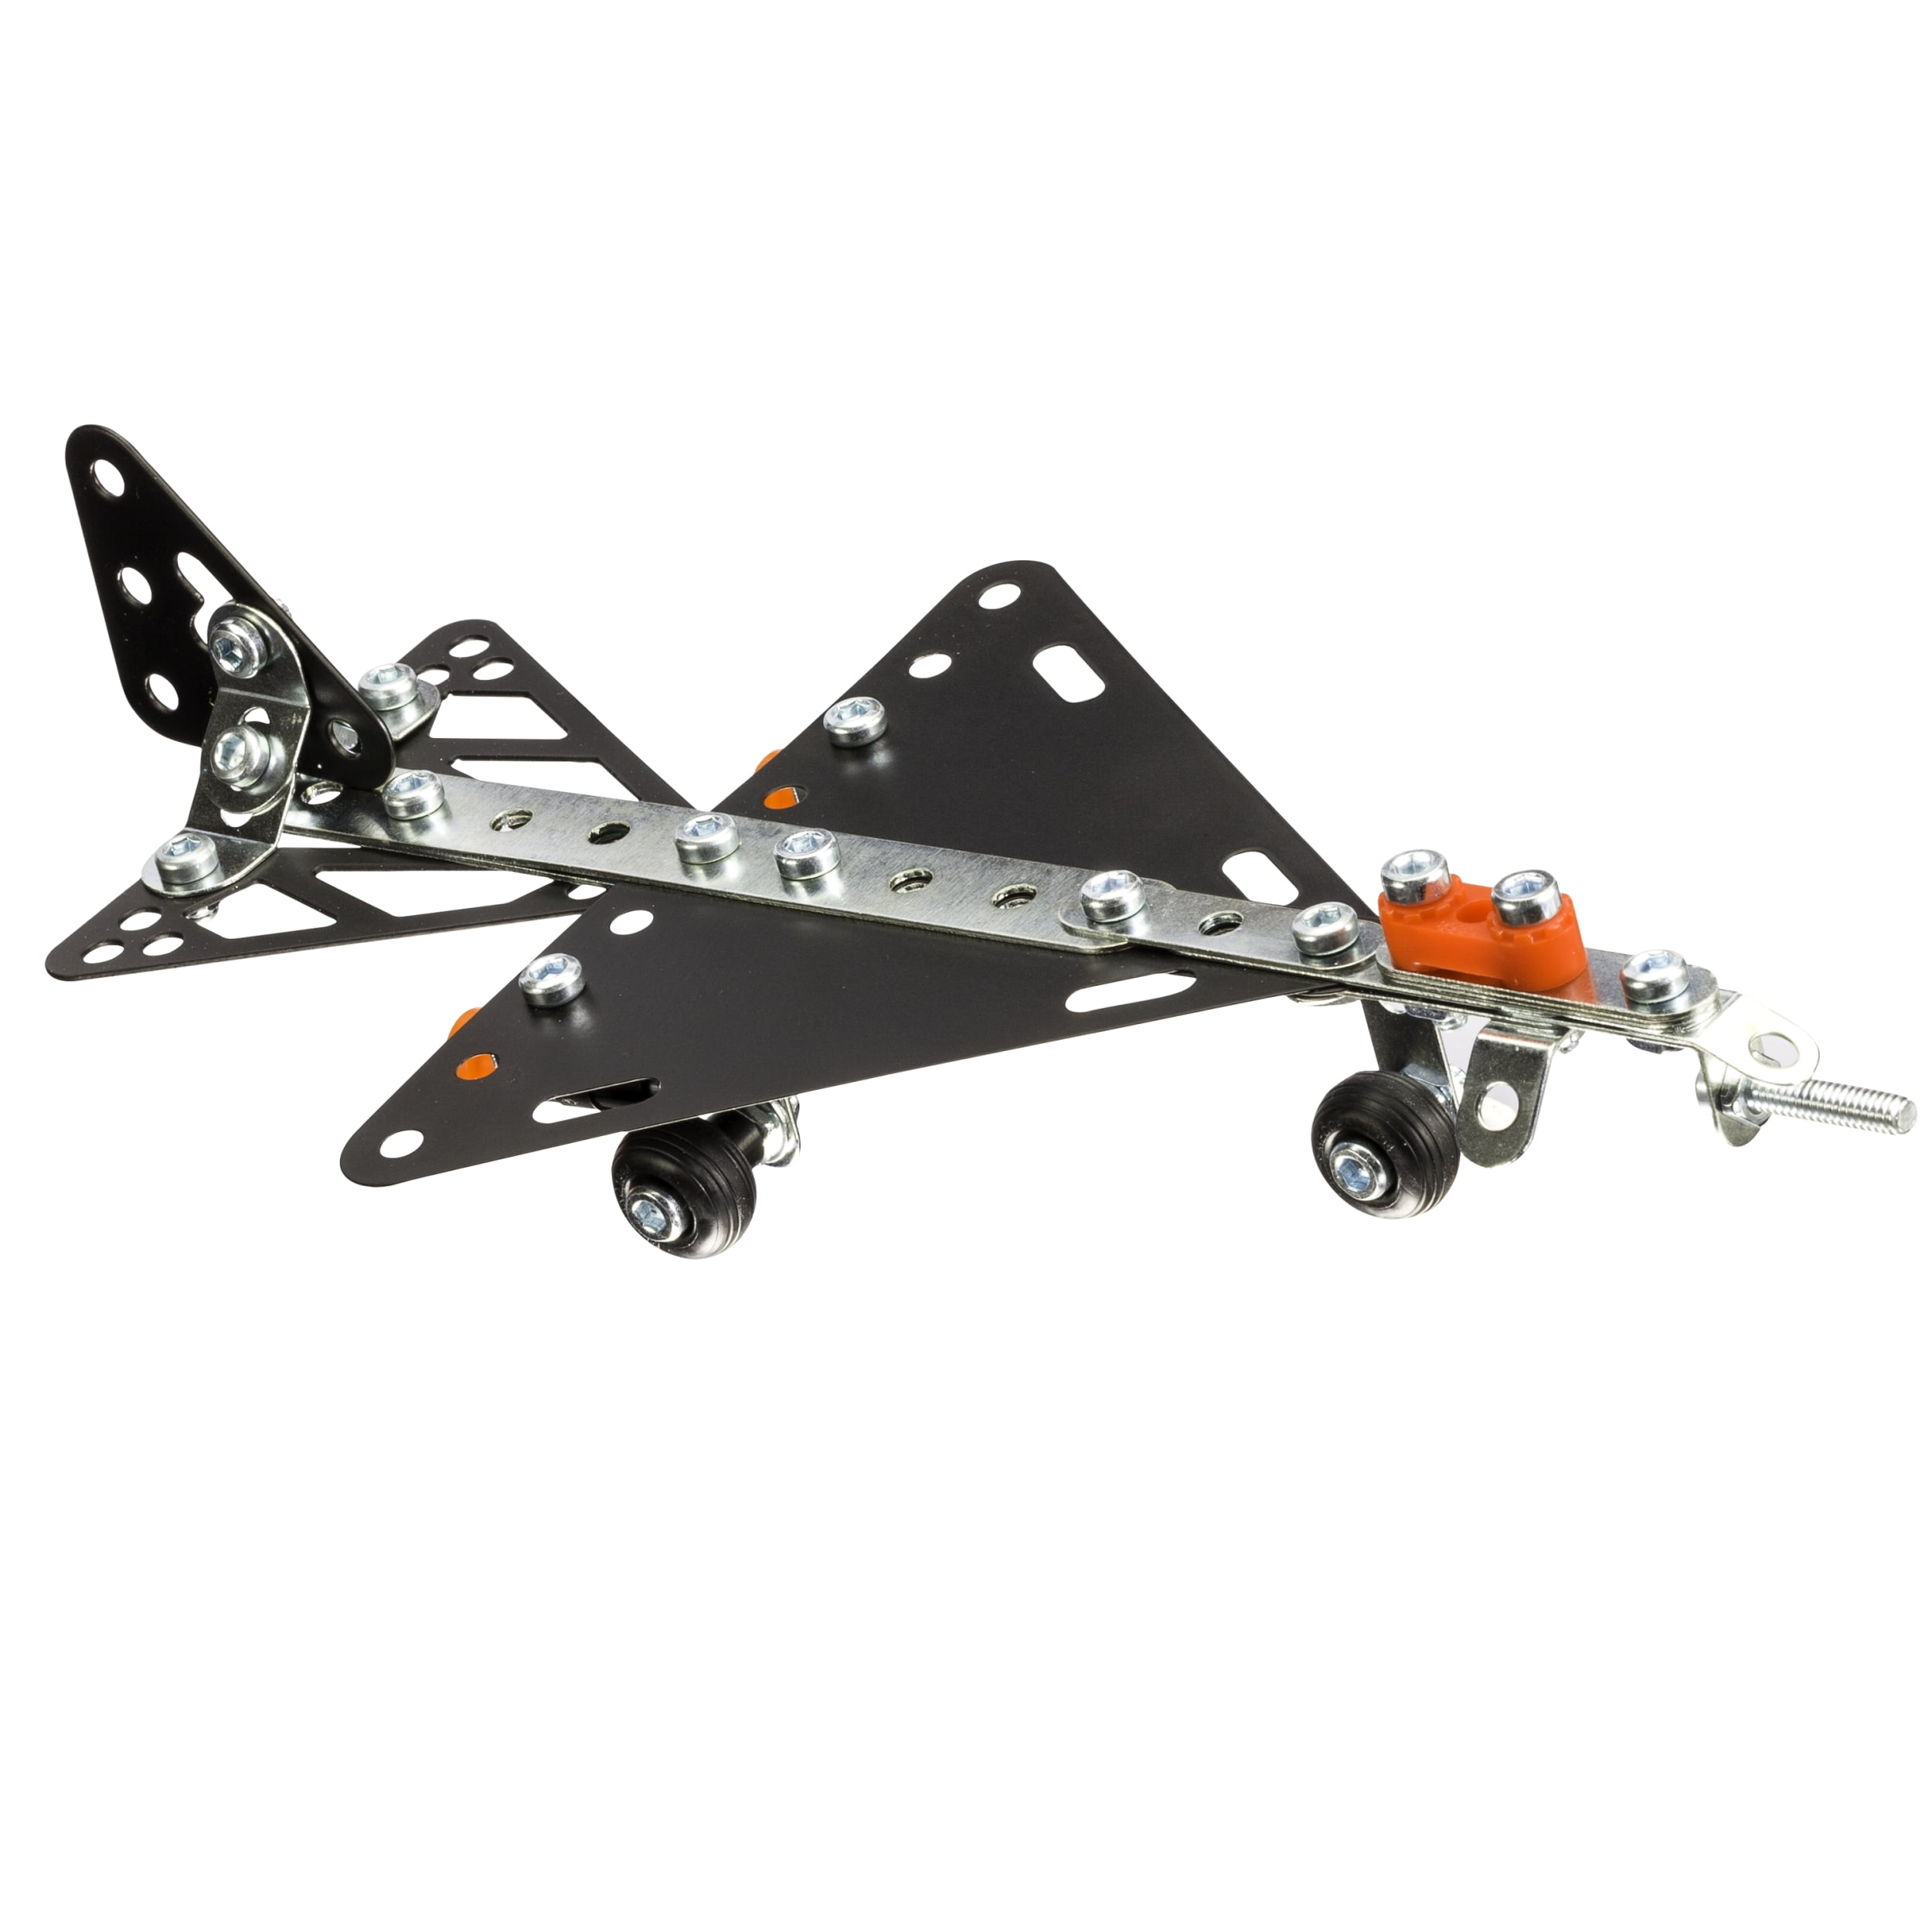 Meccano Maker System Flight Adventure 10 Model Set 15204 for sale online 